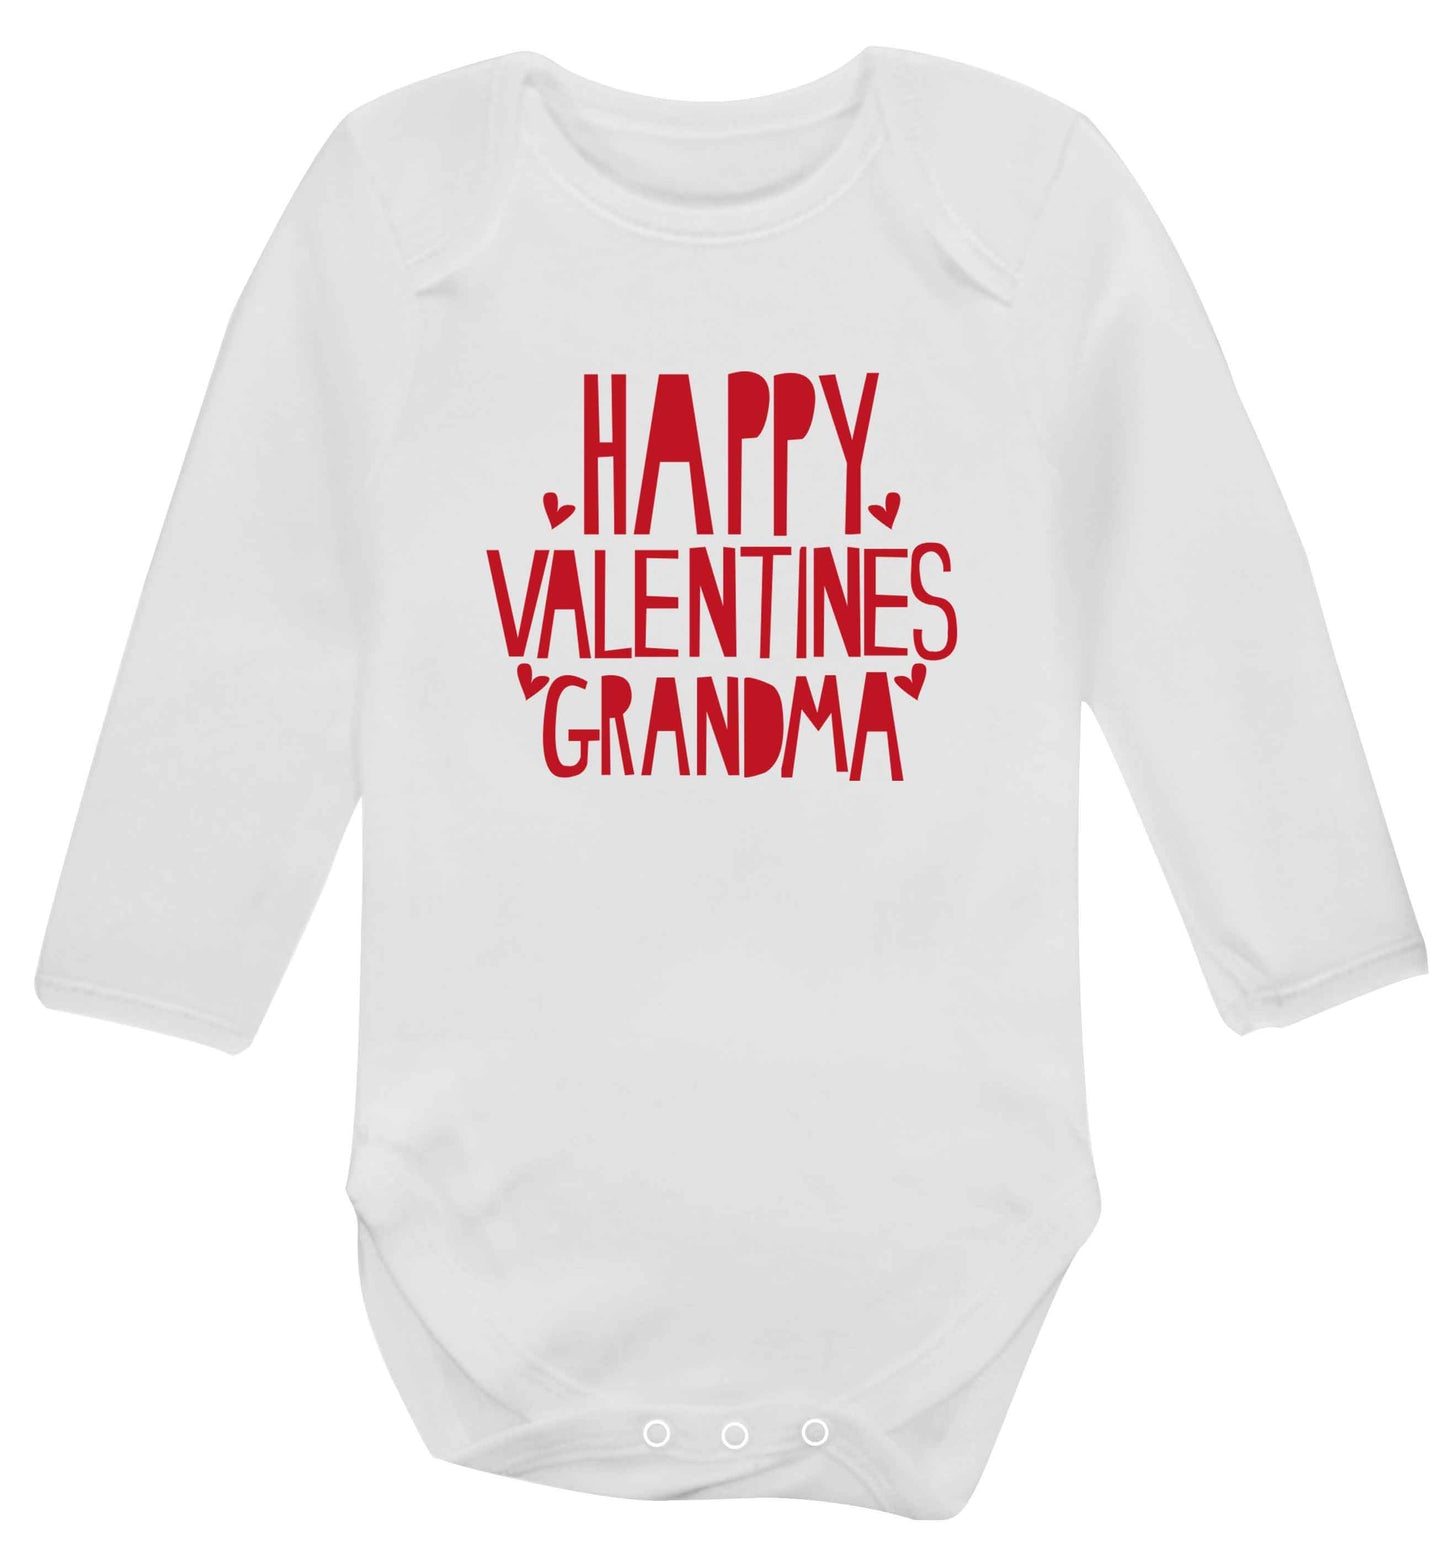 Happy valentines grandma baby vest long sleeved white 6-12 months